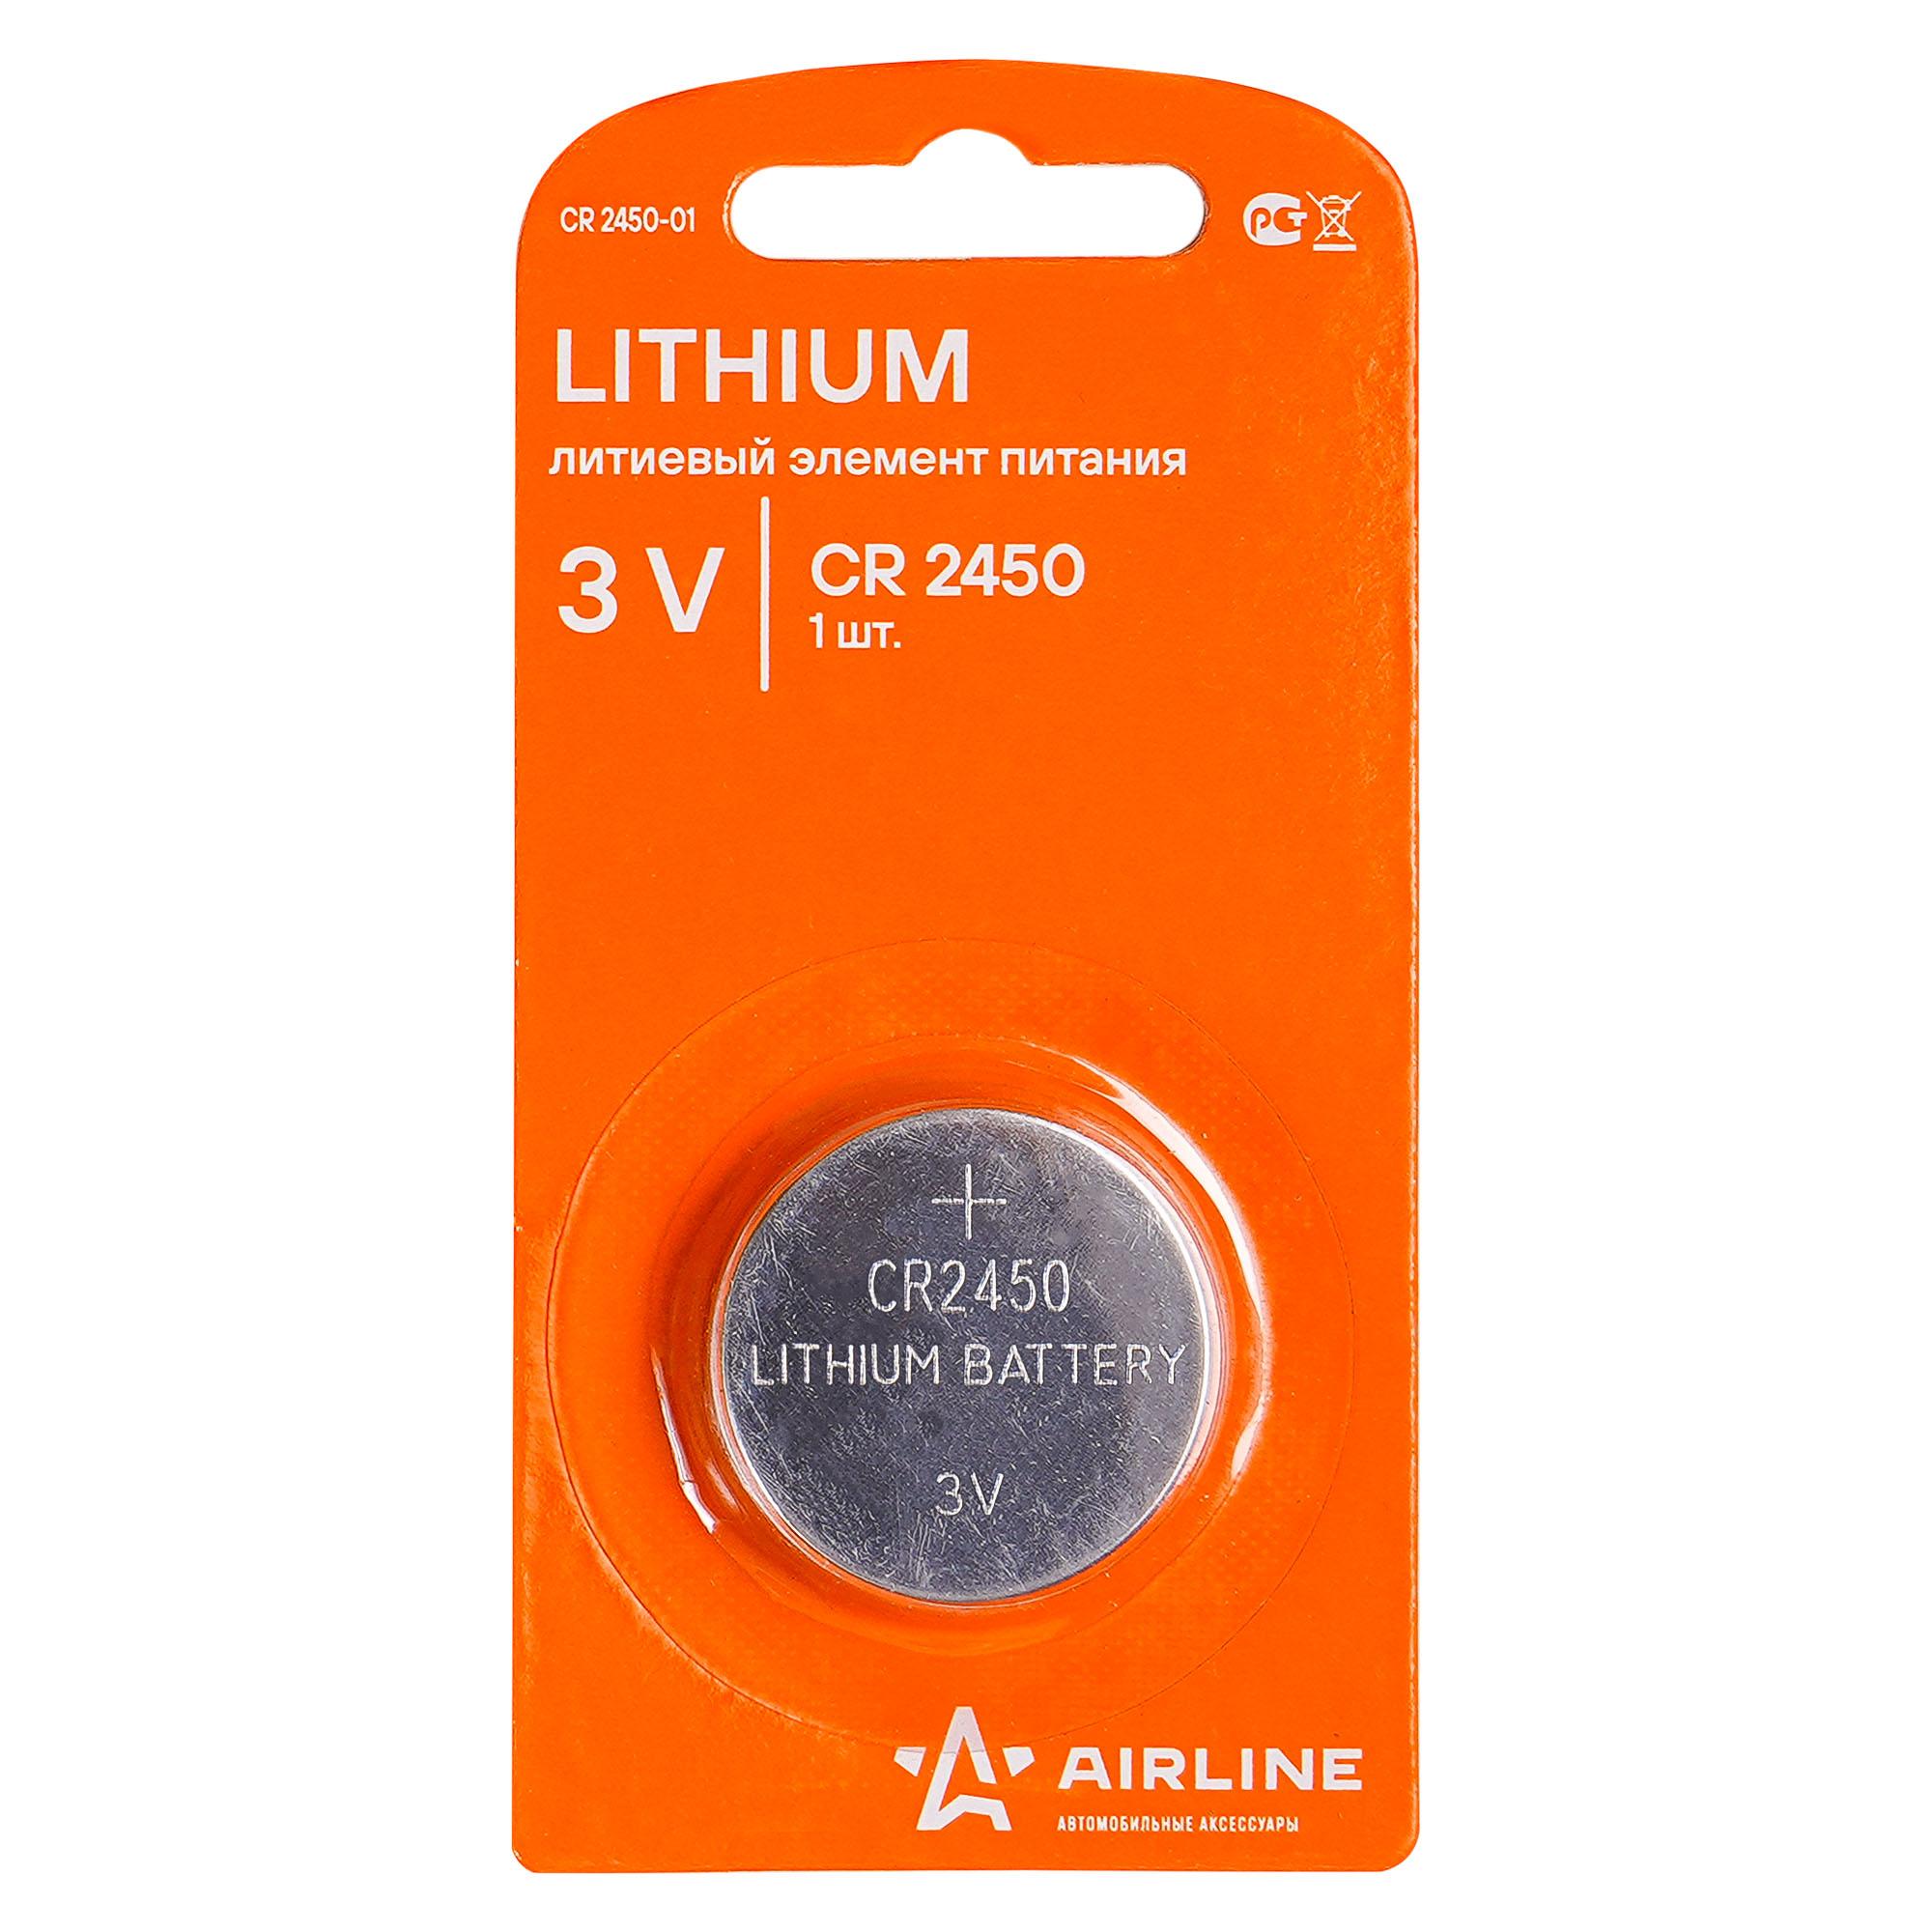 AIRLINE CR245001 Батарейка CR2450 3V для брелоков сигнализаций литиевая 1 шт. (CR2450-01) airline батарейка cr2016 3v для брелоков сигнализаций литиевая 1 шт cr2016 3v для брелоко